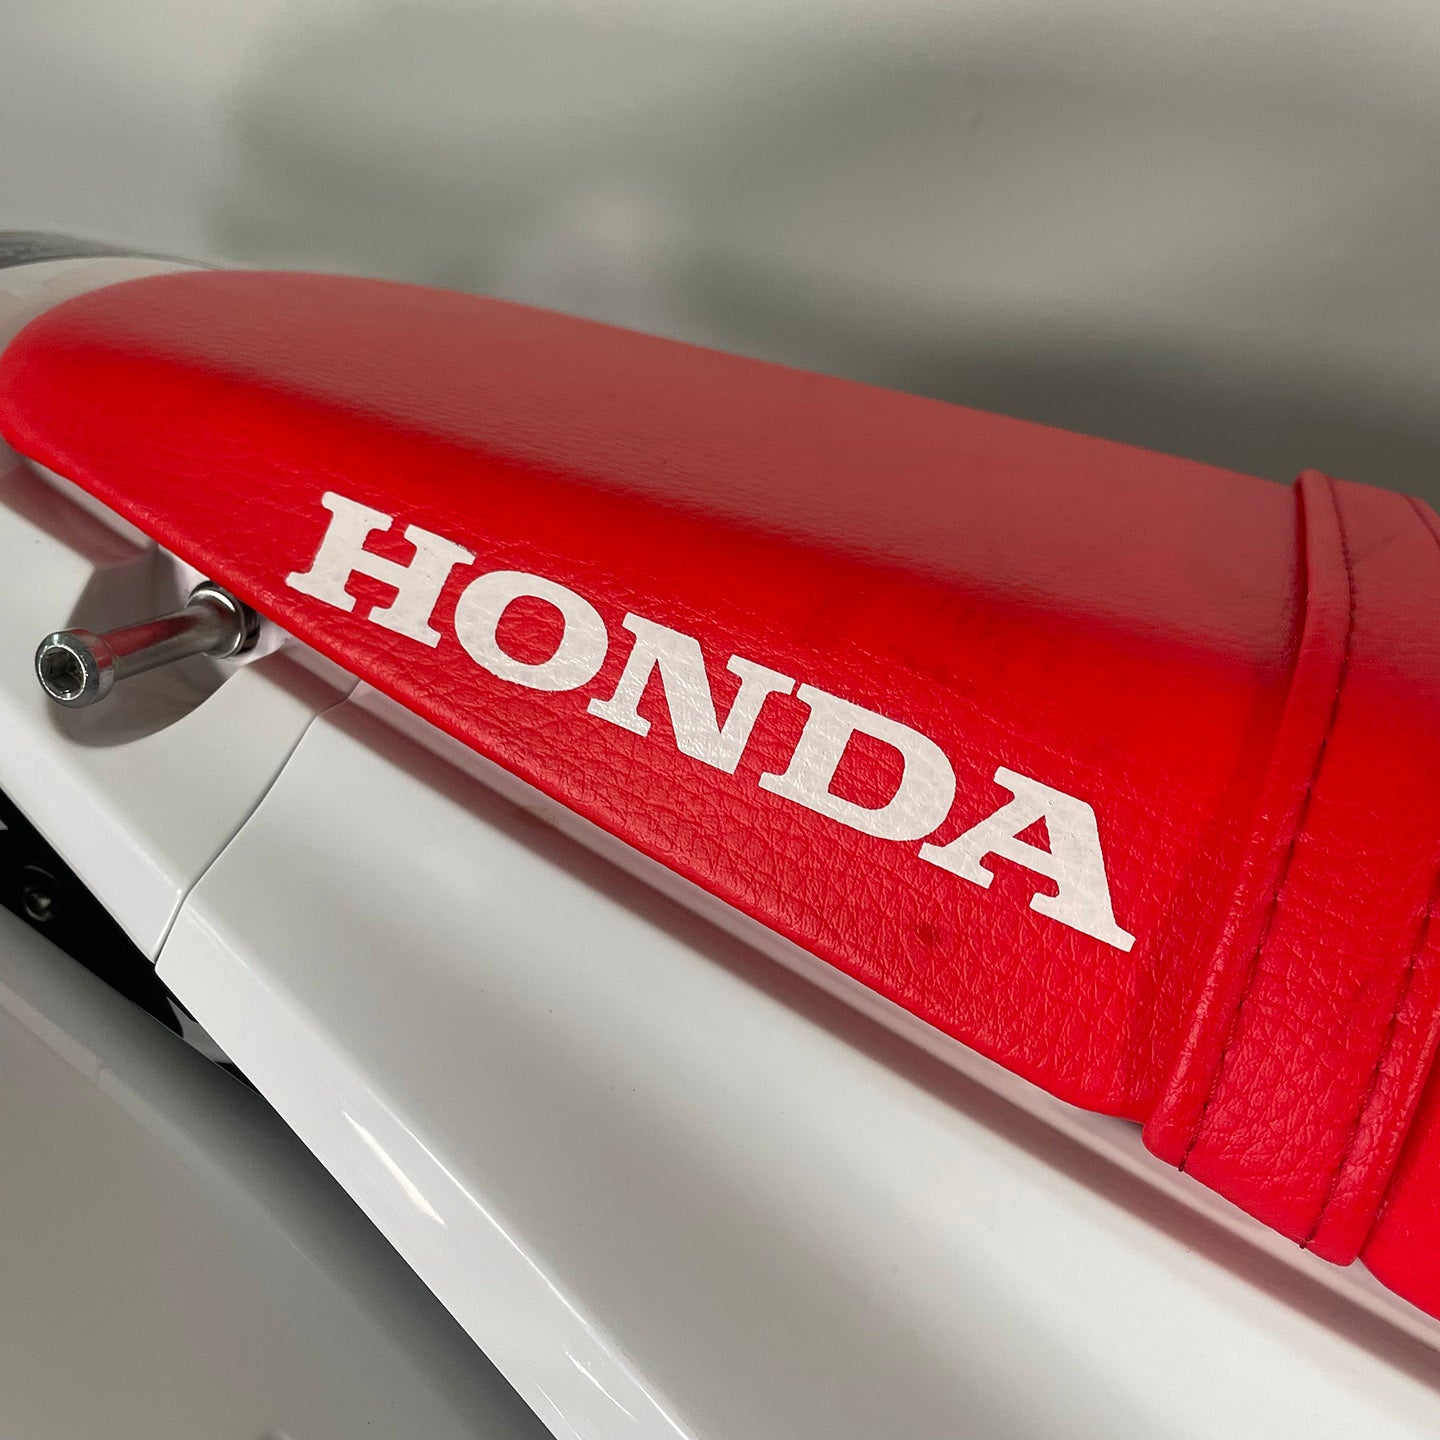 2015 Honda CRF 250L (745 miles)